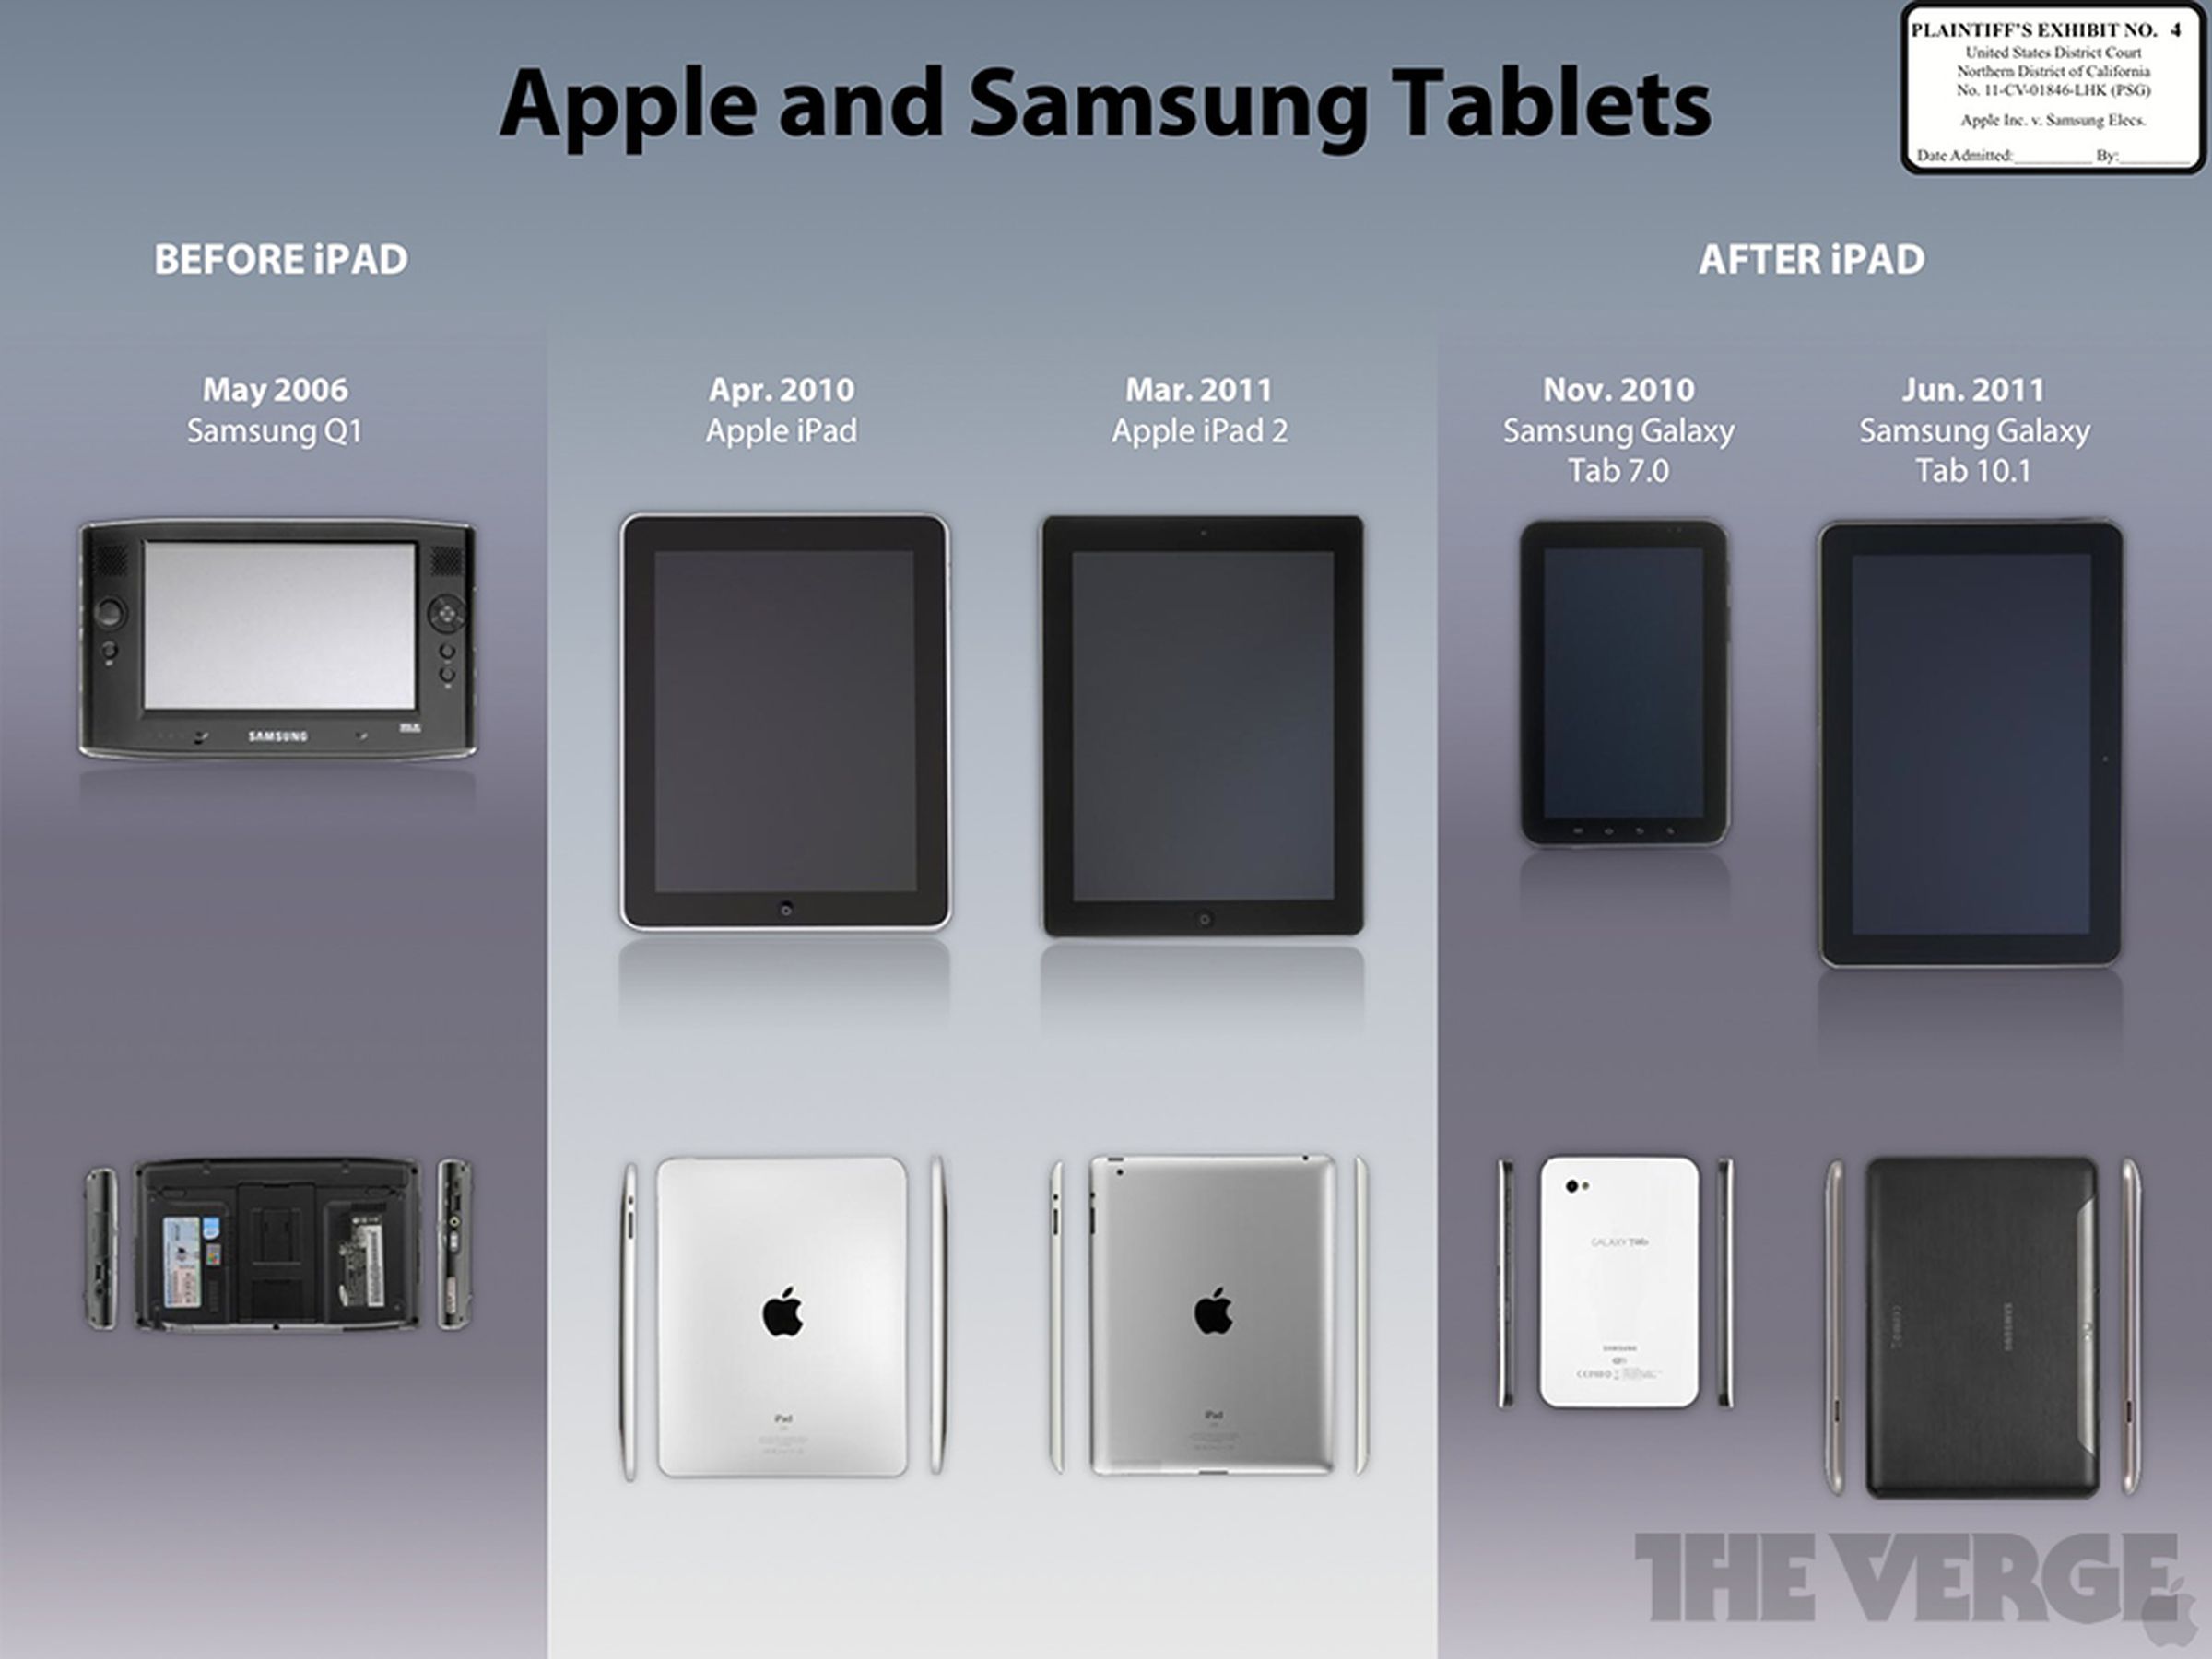 Apple v. Samsung trial evidence: August 6th, 2012